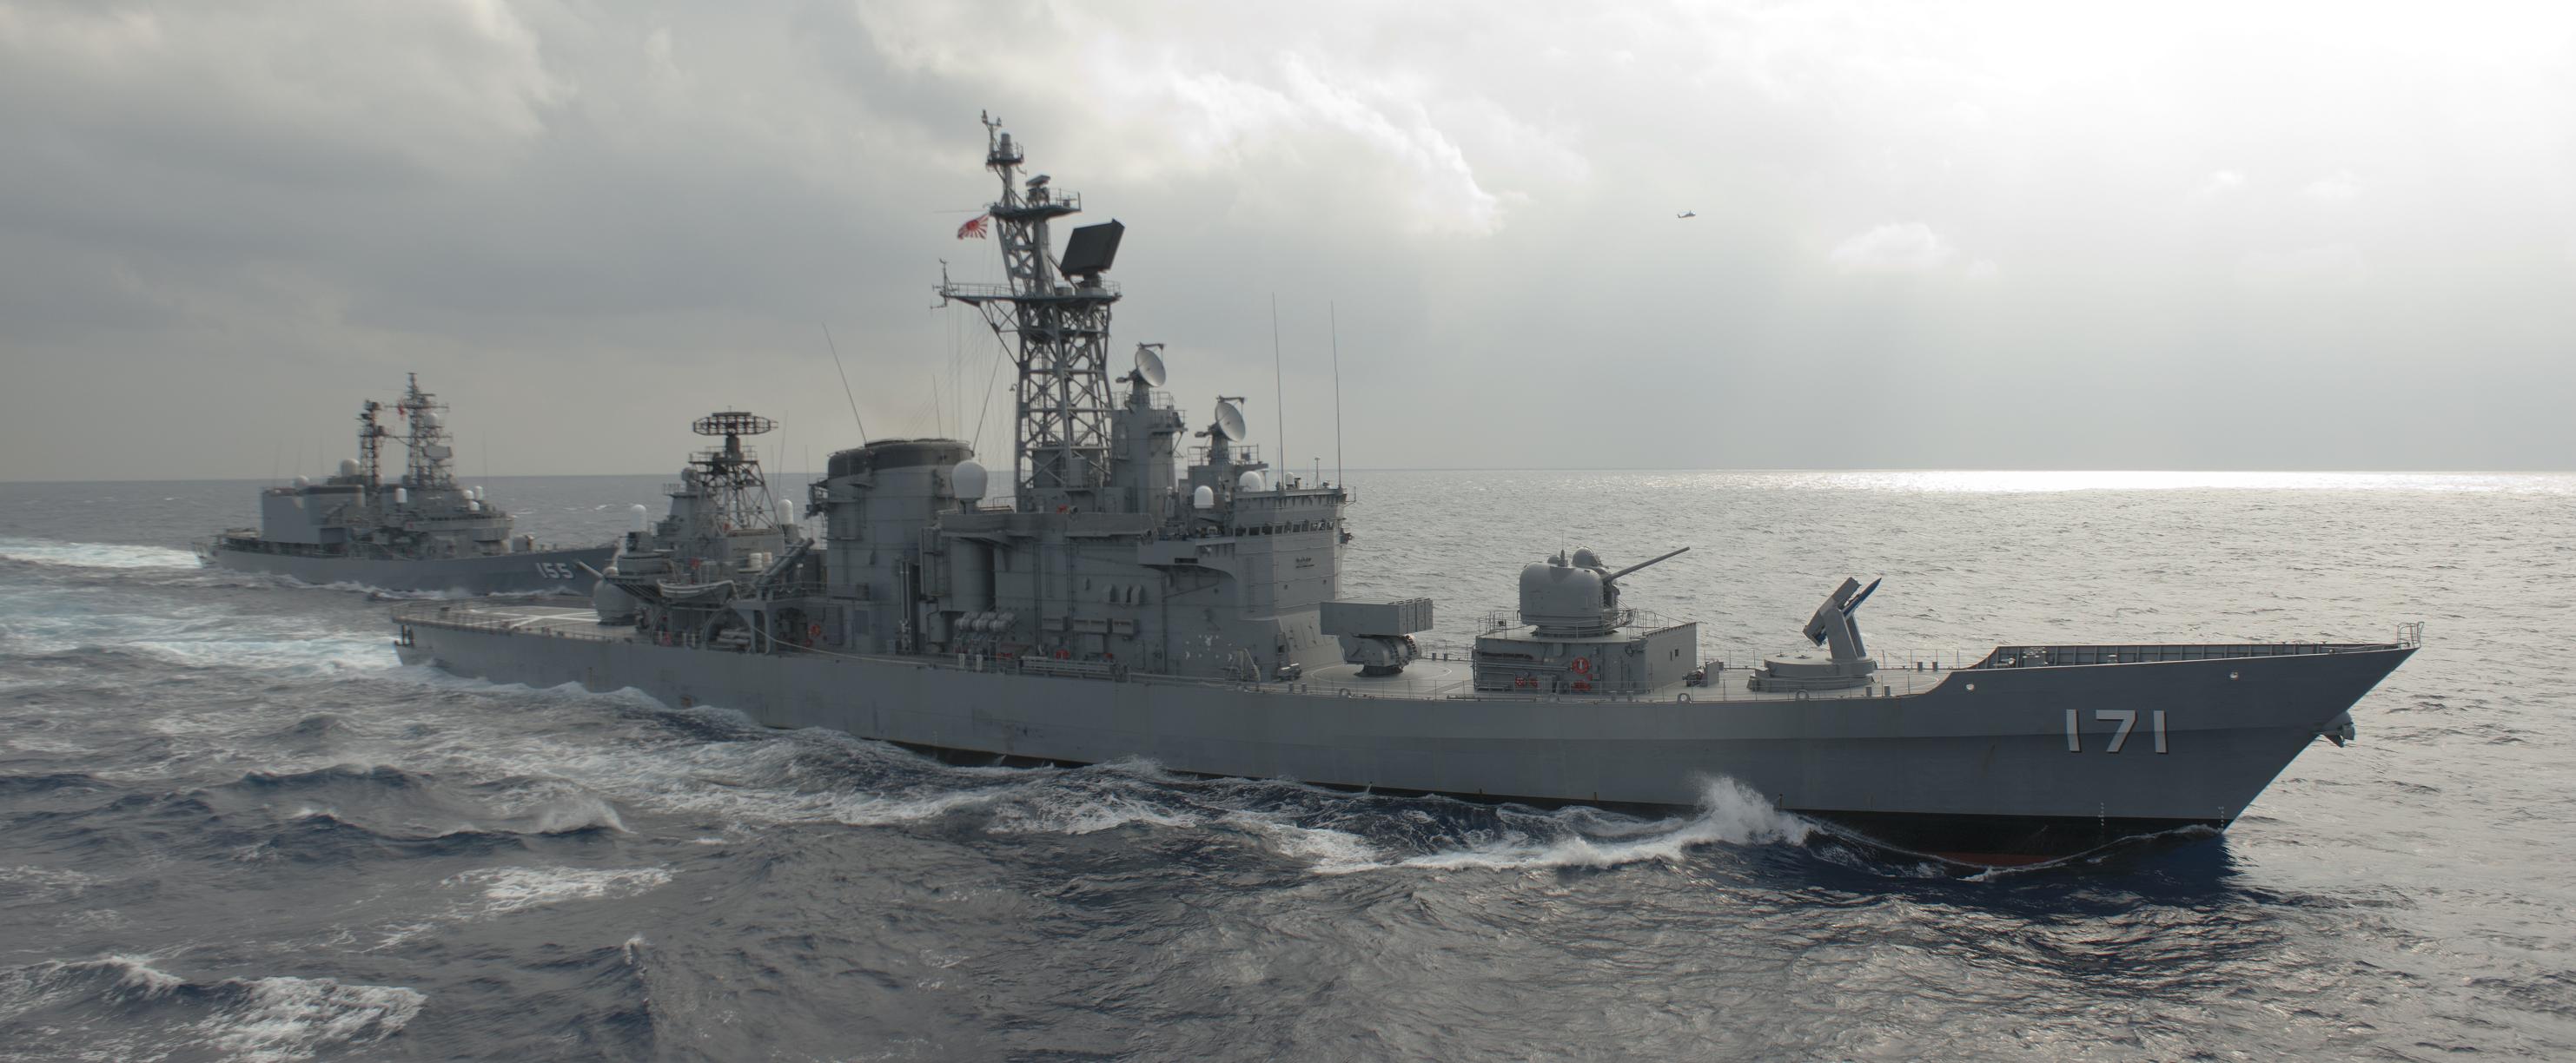 US_Navy_101206-N-2562W-015_The_Japan_Maritime_Self-Defense_ships_JS_Hatakaze_%28DDG_171%29_and_JS_Hamagiri_%28DD_155%29_steam_in_formation_during_Keen_Swor.jpg